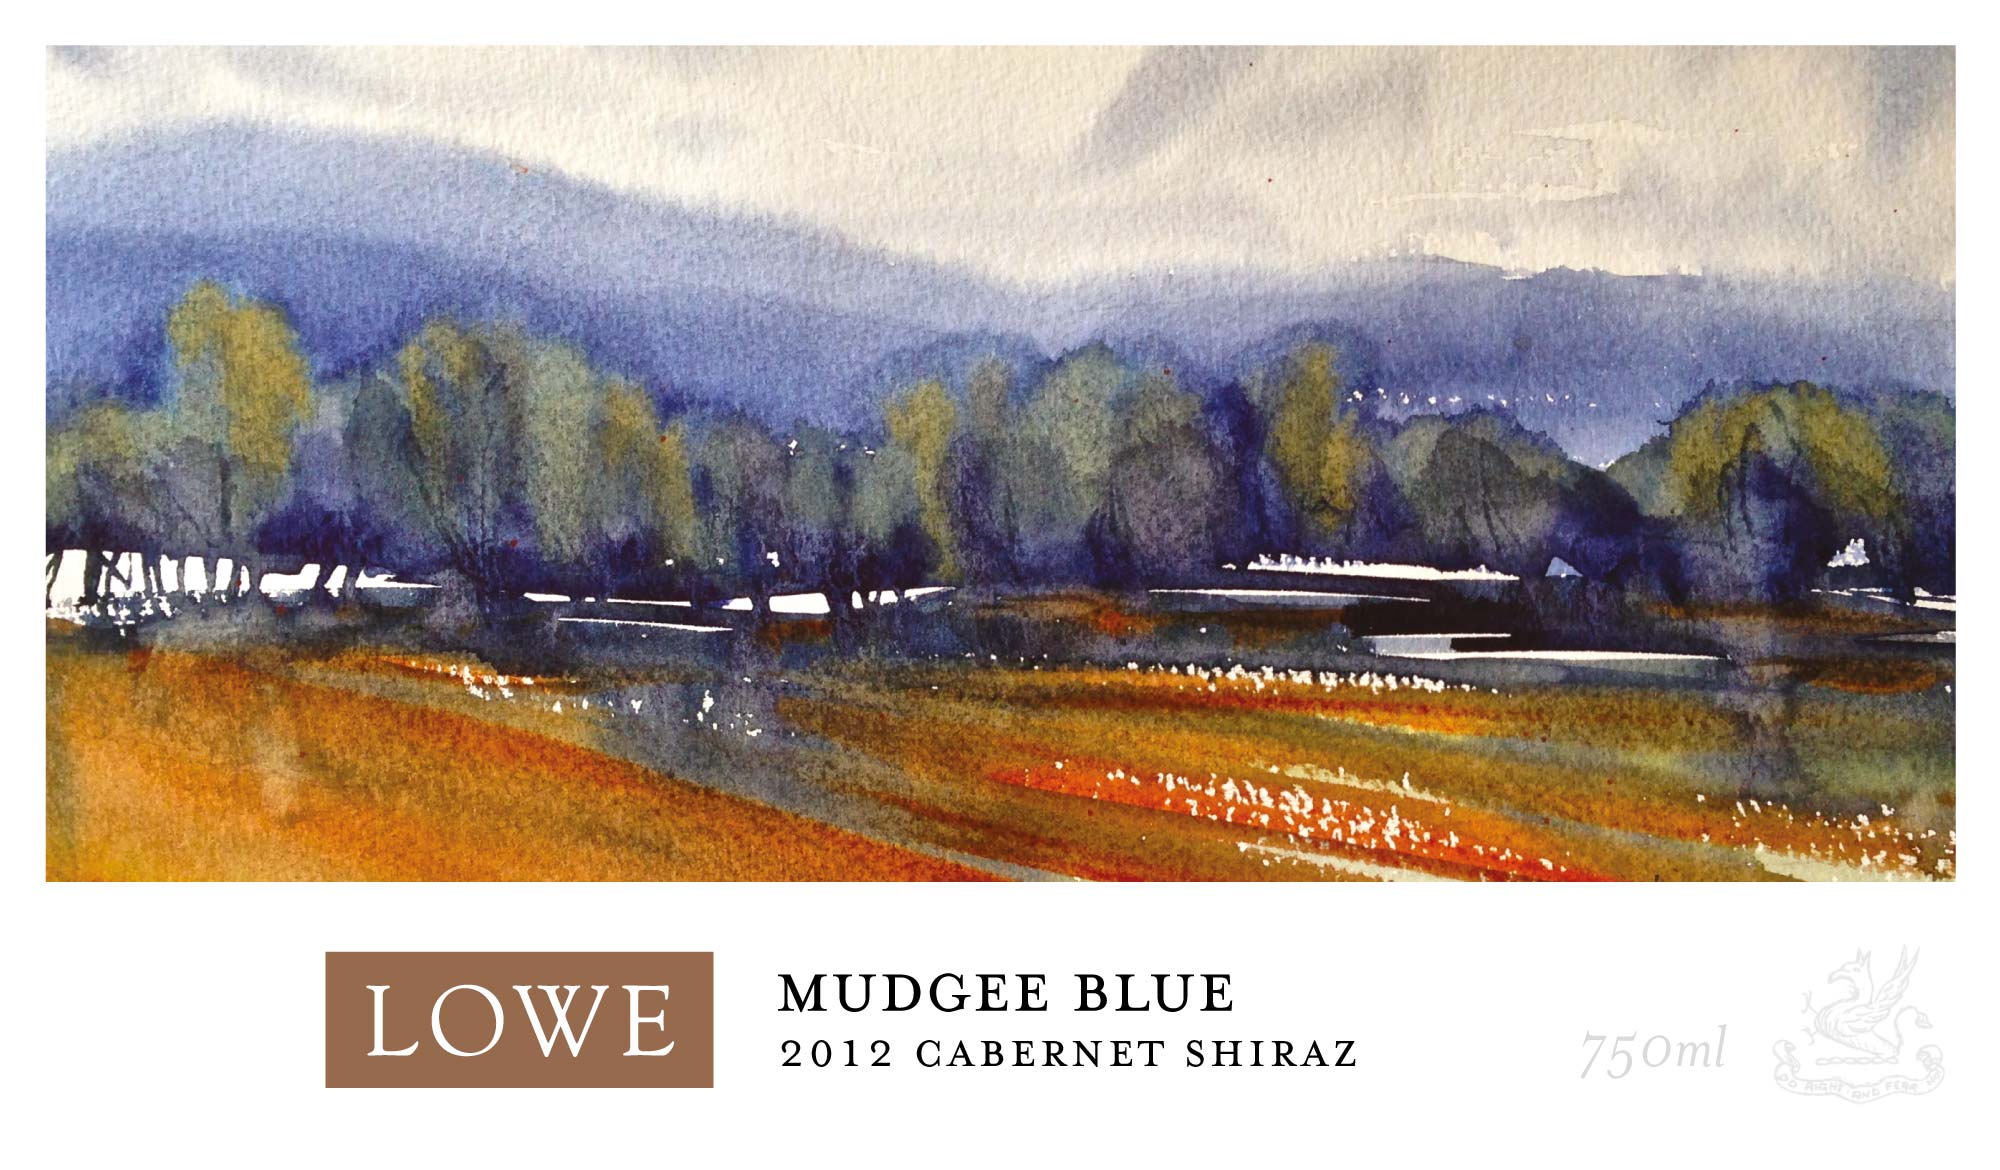 Lowe Mudgee Blue Wine Label Design